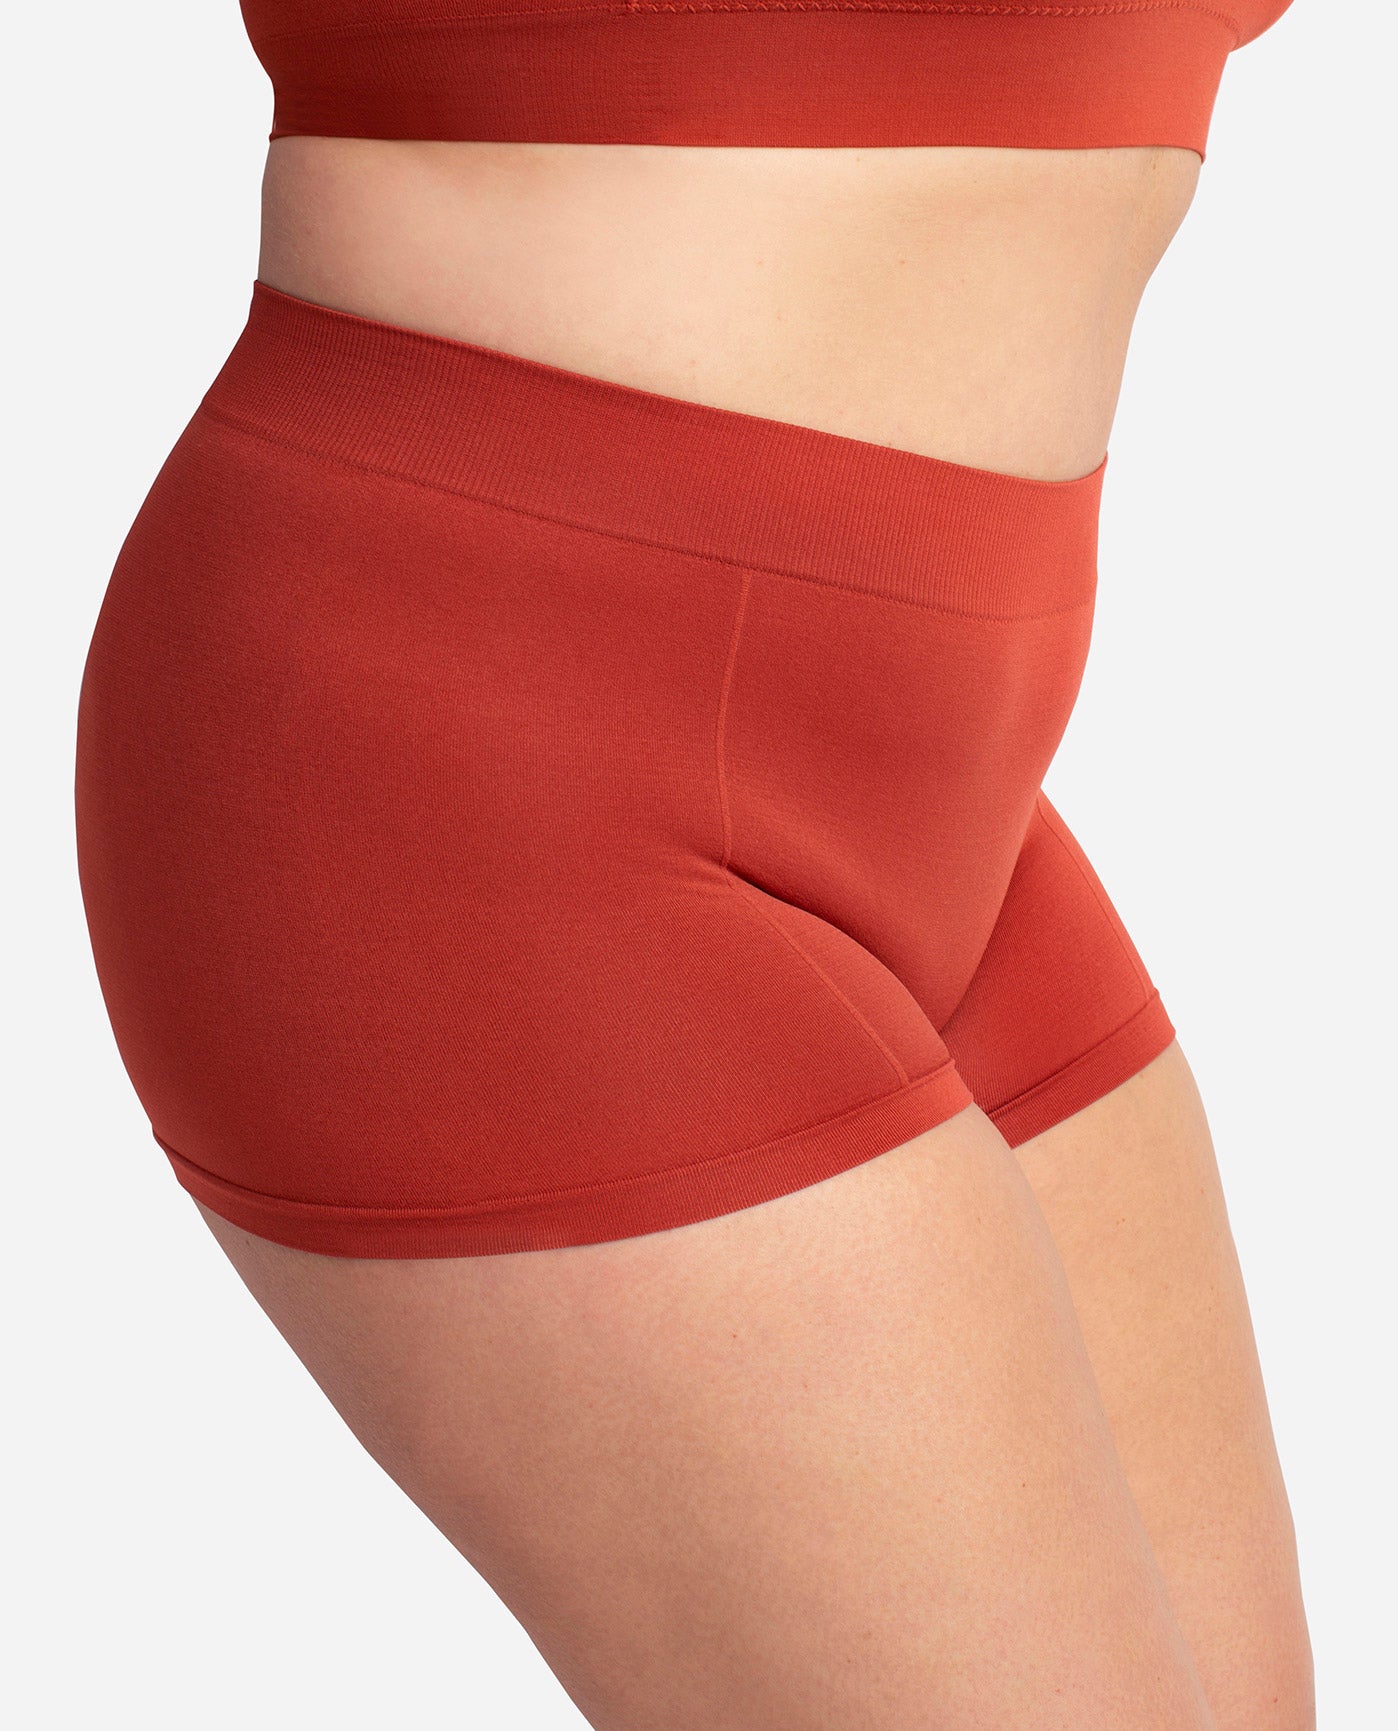 Auden Women's Seamless Boyshort Underwear - Crimson Red (Large